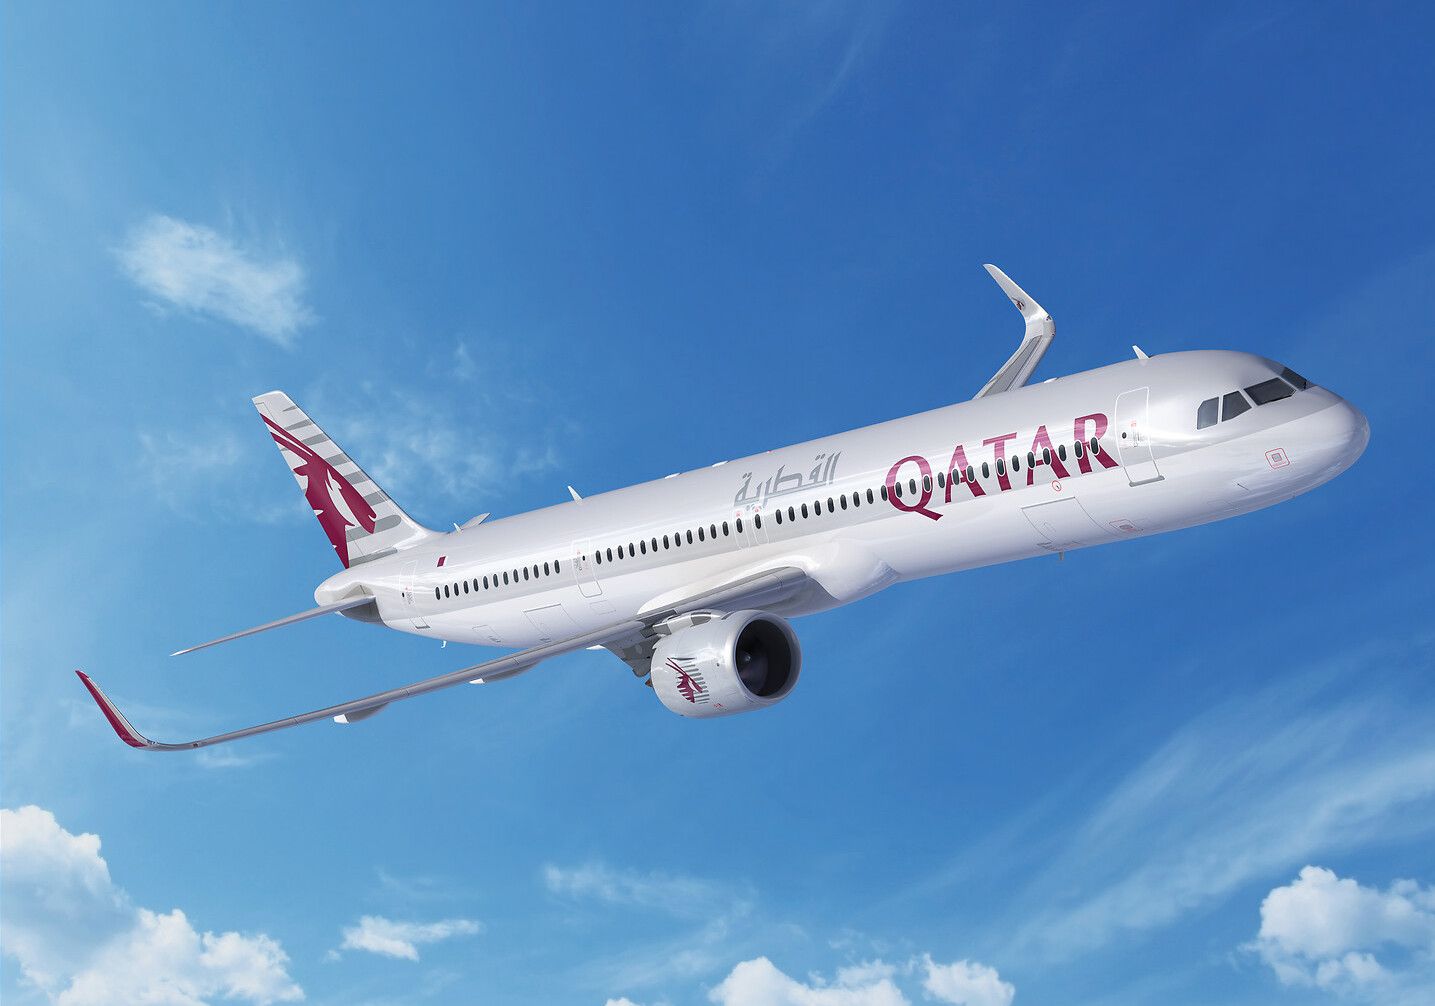 A31neo Qatar